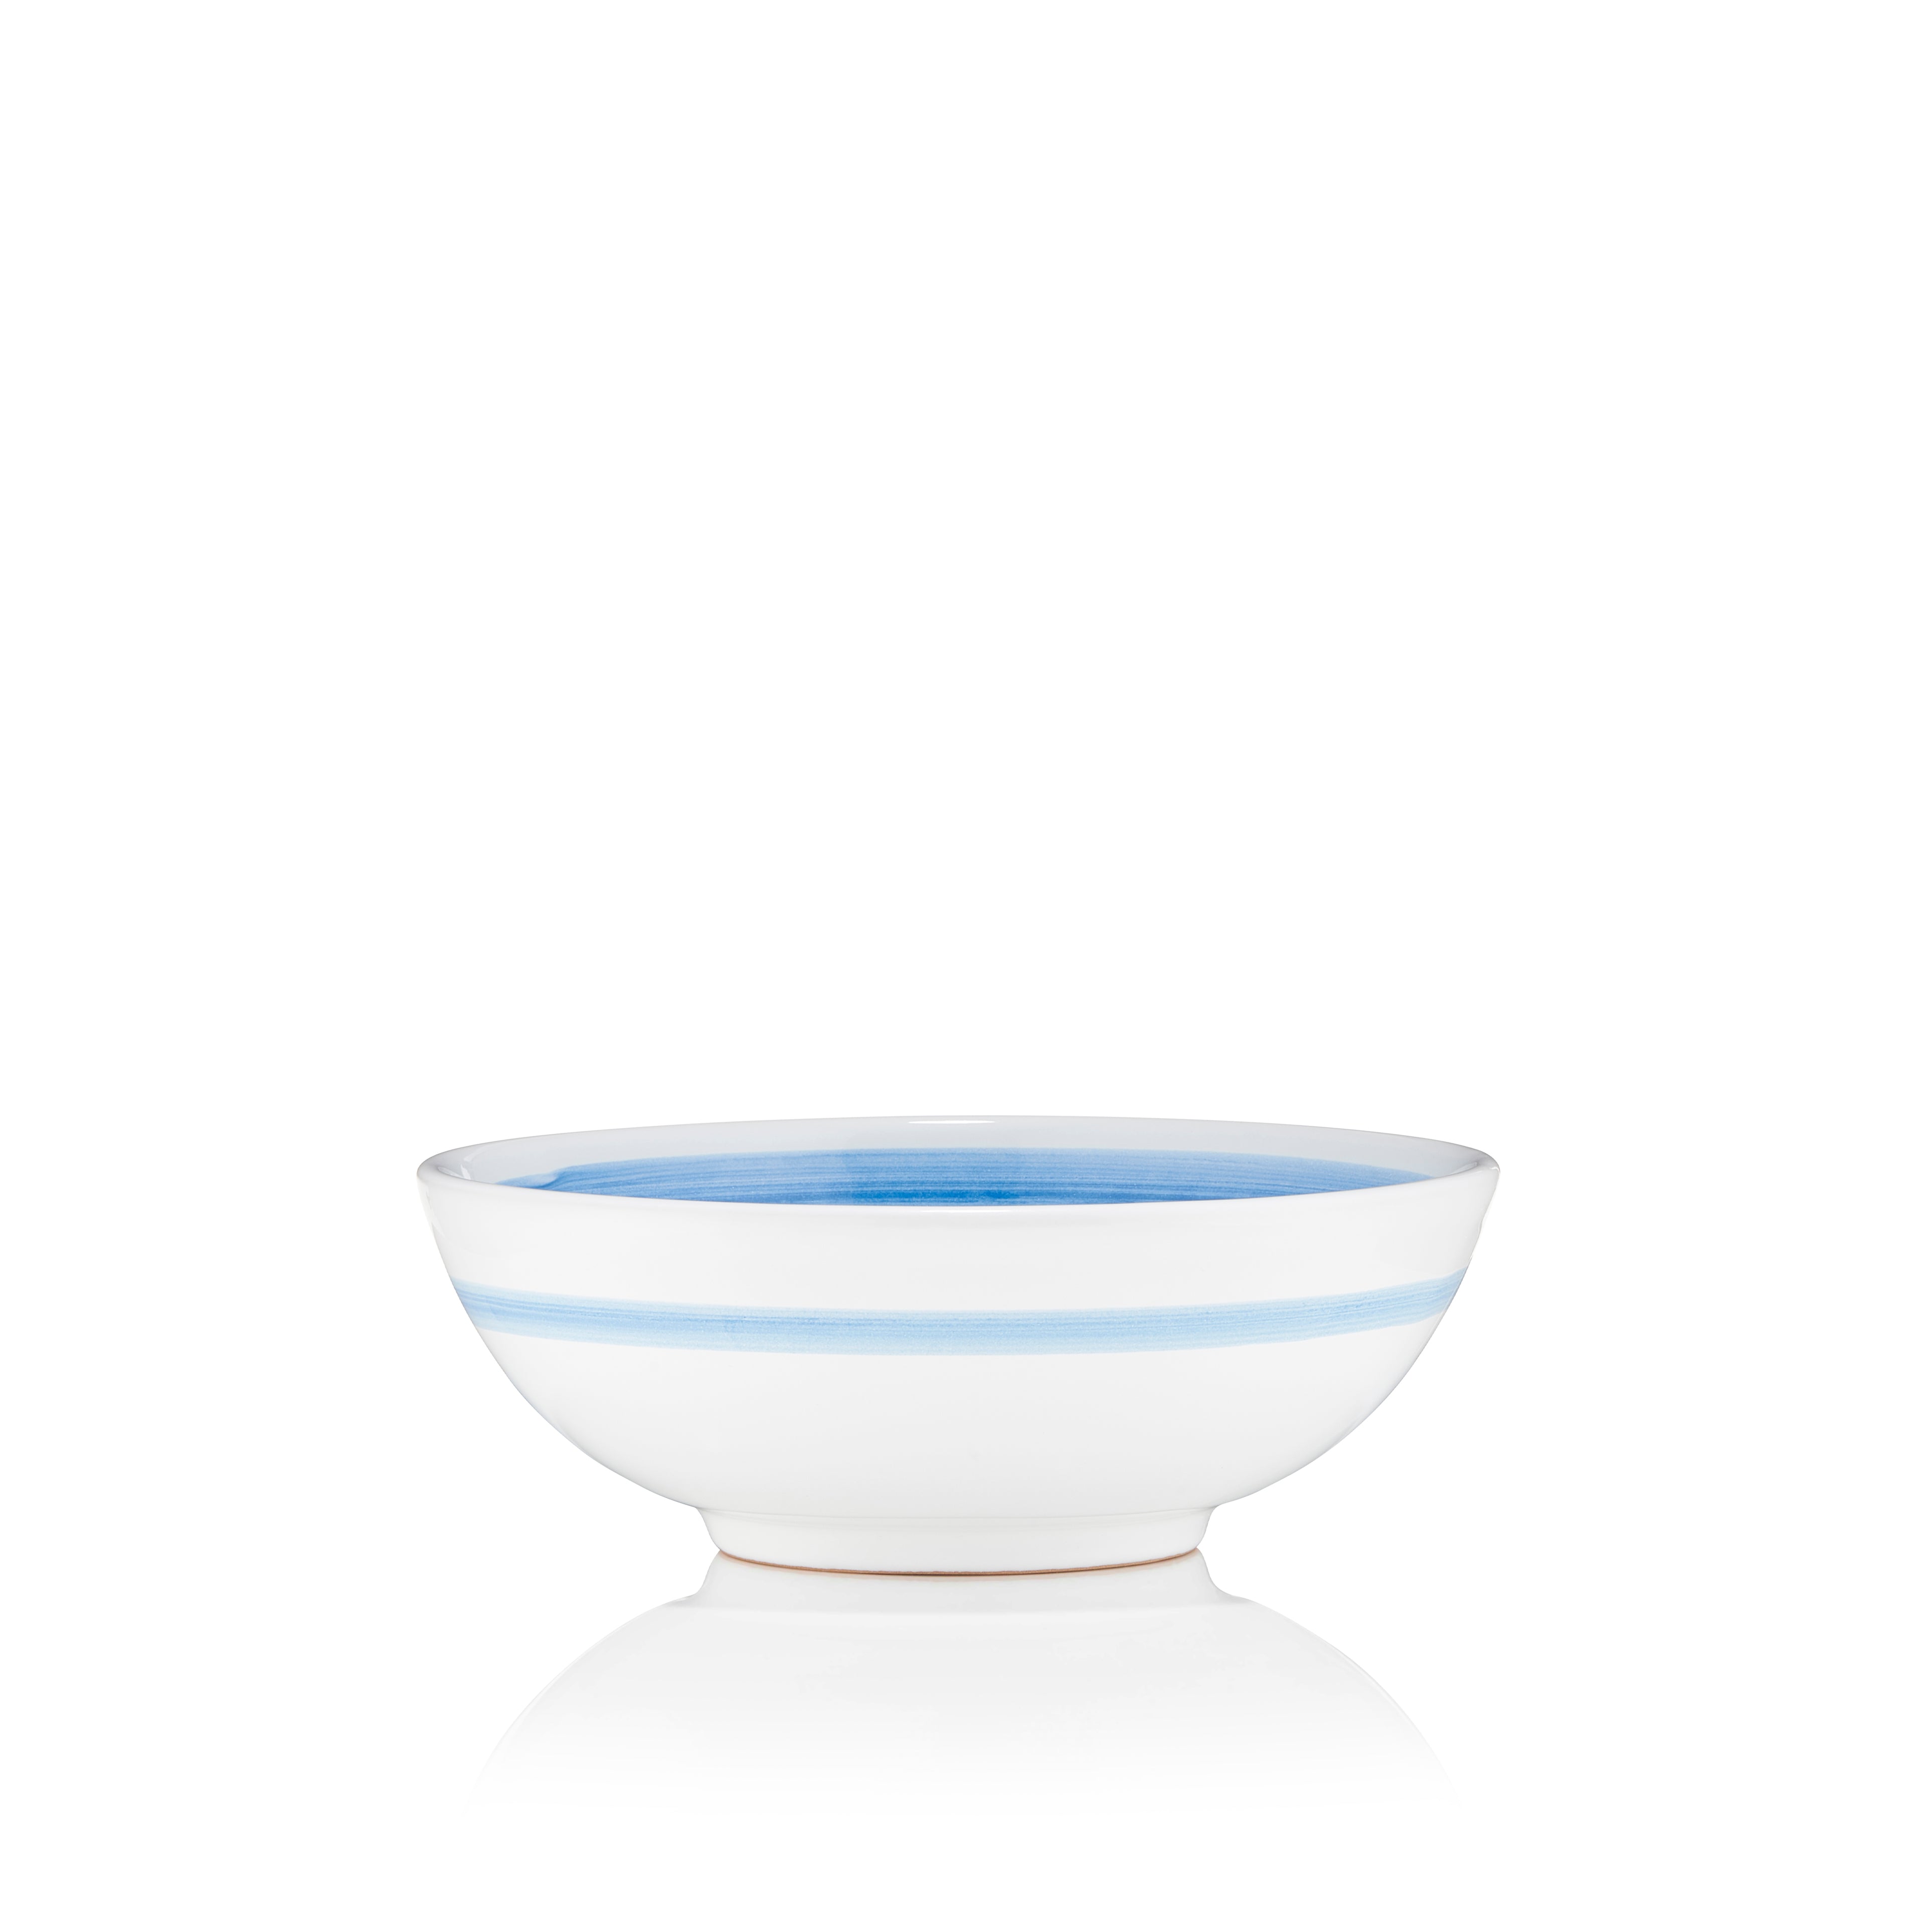 S&B 'Brushed' Ceramic Soup Bowl in Light Blue, 16cm